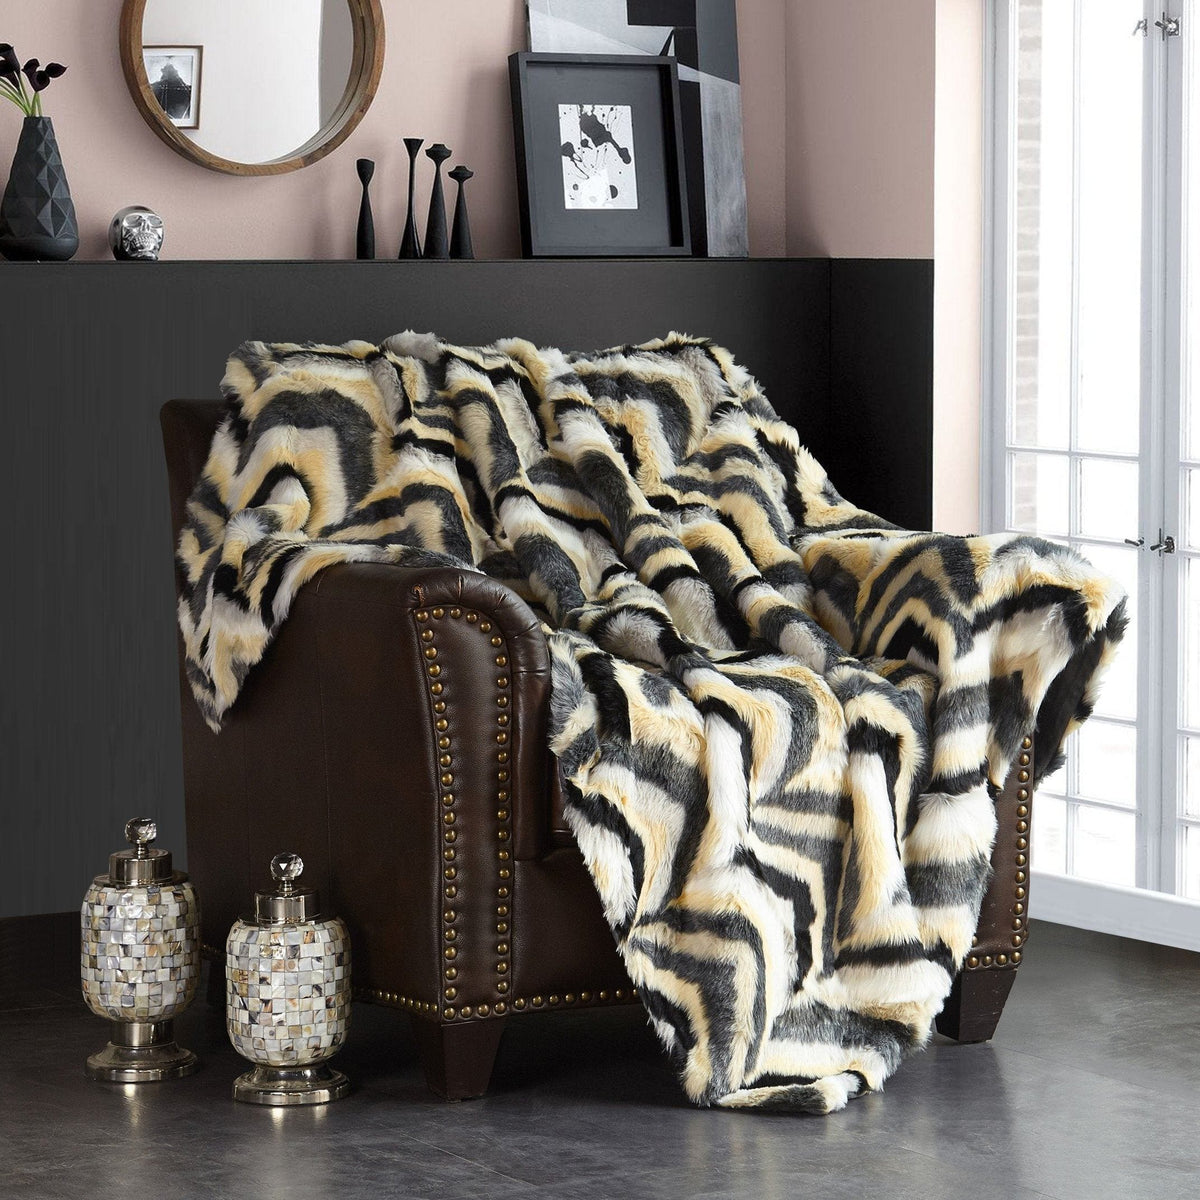 Chic Home Orna Throw Blanket Striped Chevron Shaggy Faux Fur Design 